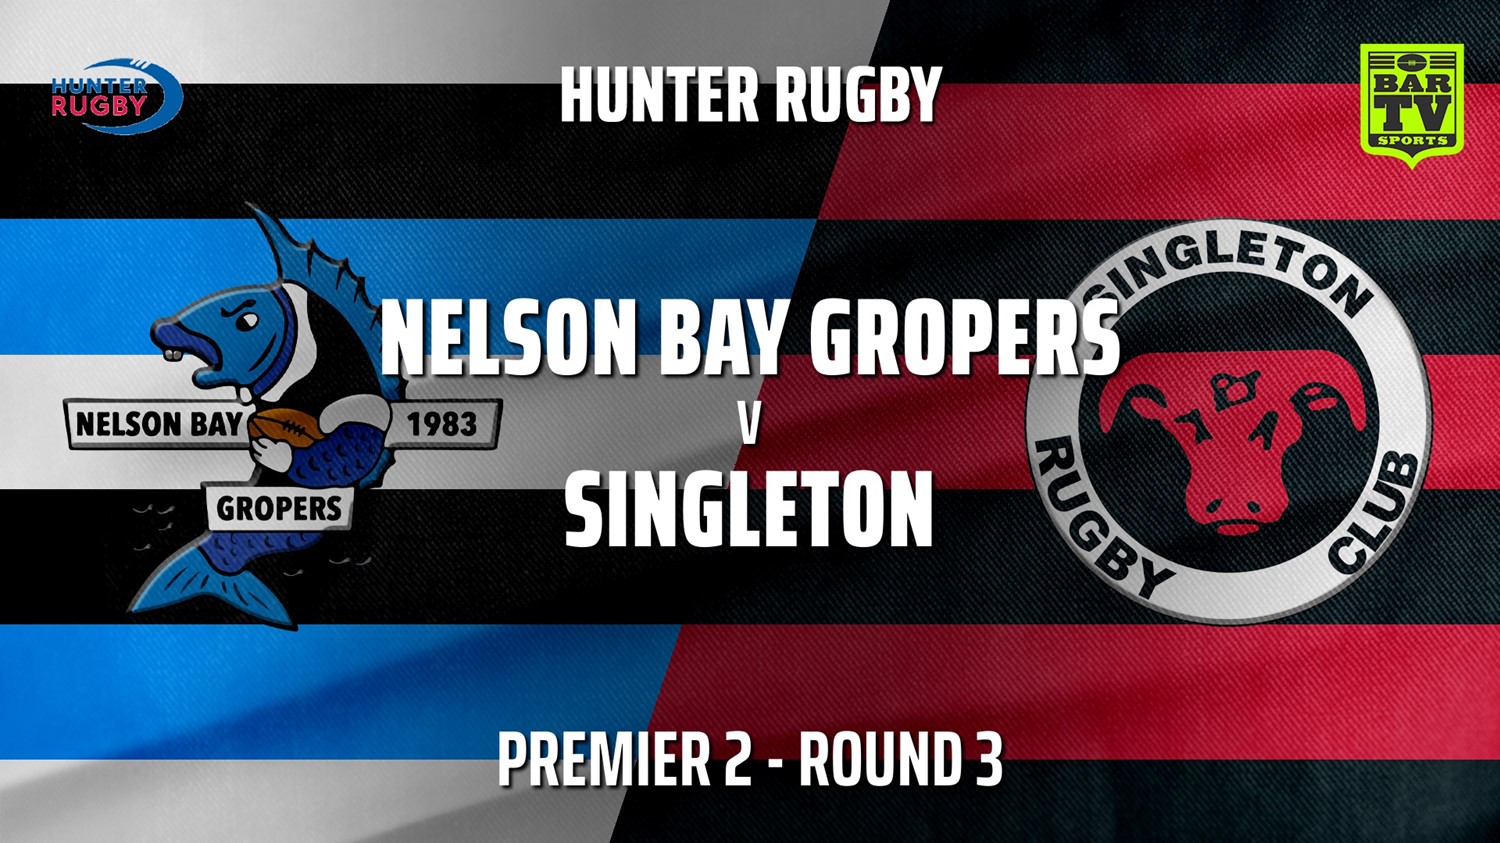 210501-HRU Round 3 - Premier 2 - Nelson Bay Gropers v Singleton Bulls Slate Image